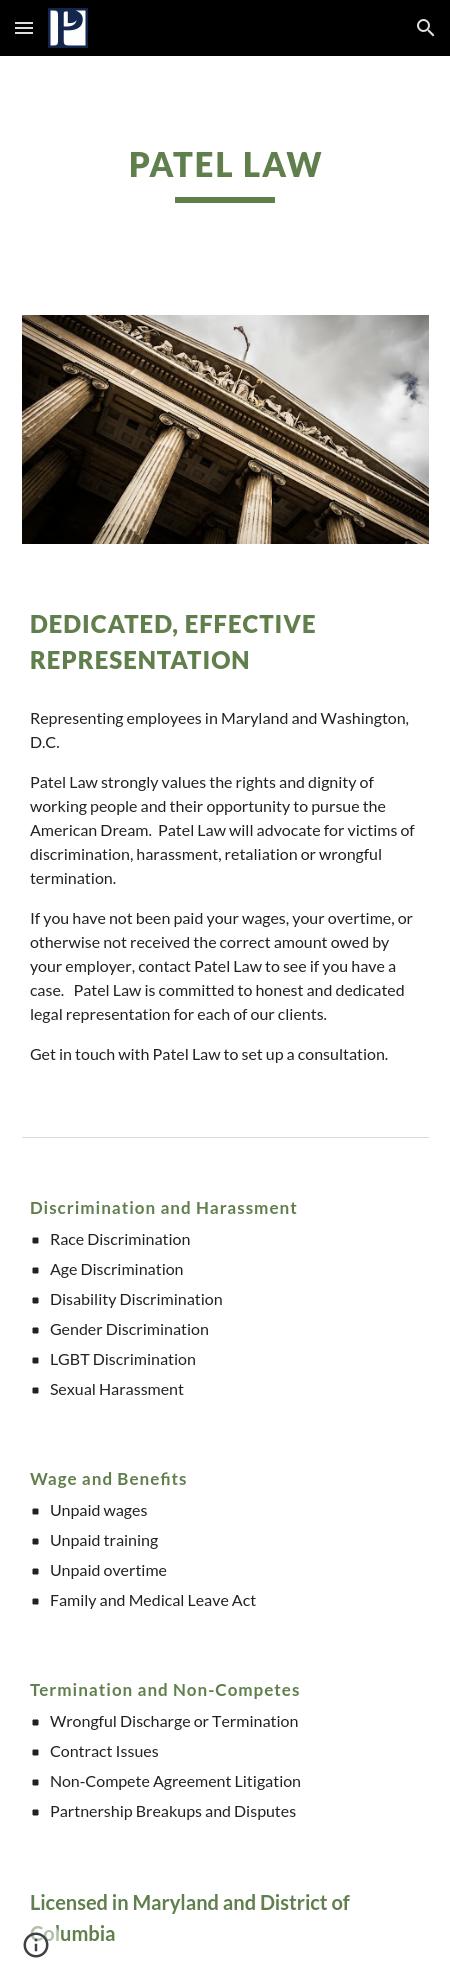 Patel Law Group, LLC - Rockville MD Lawyers